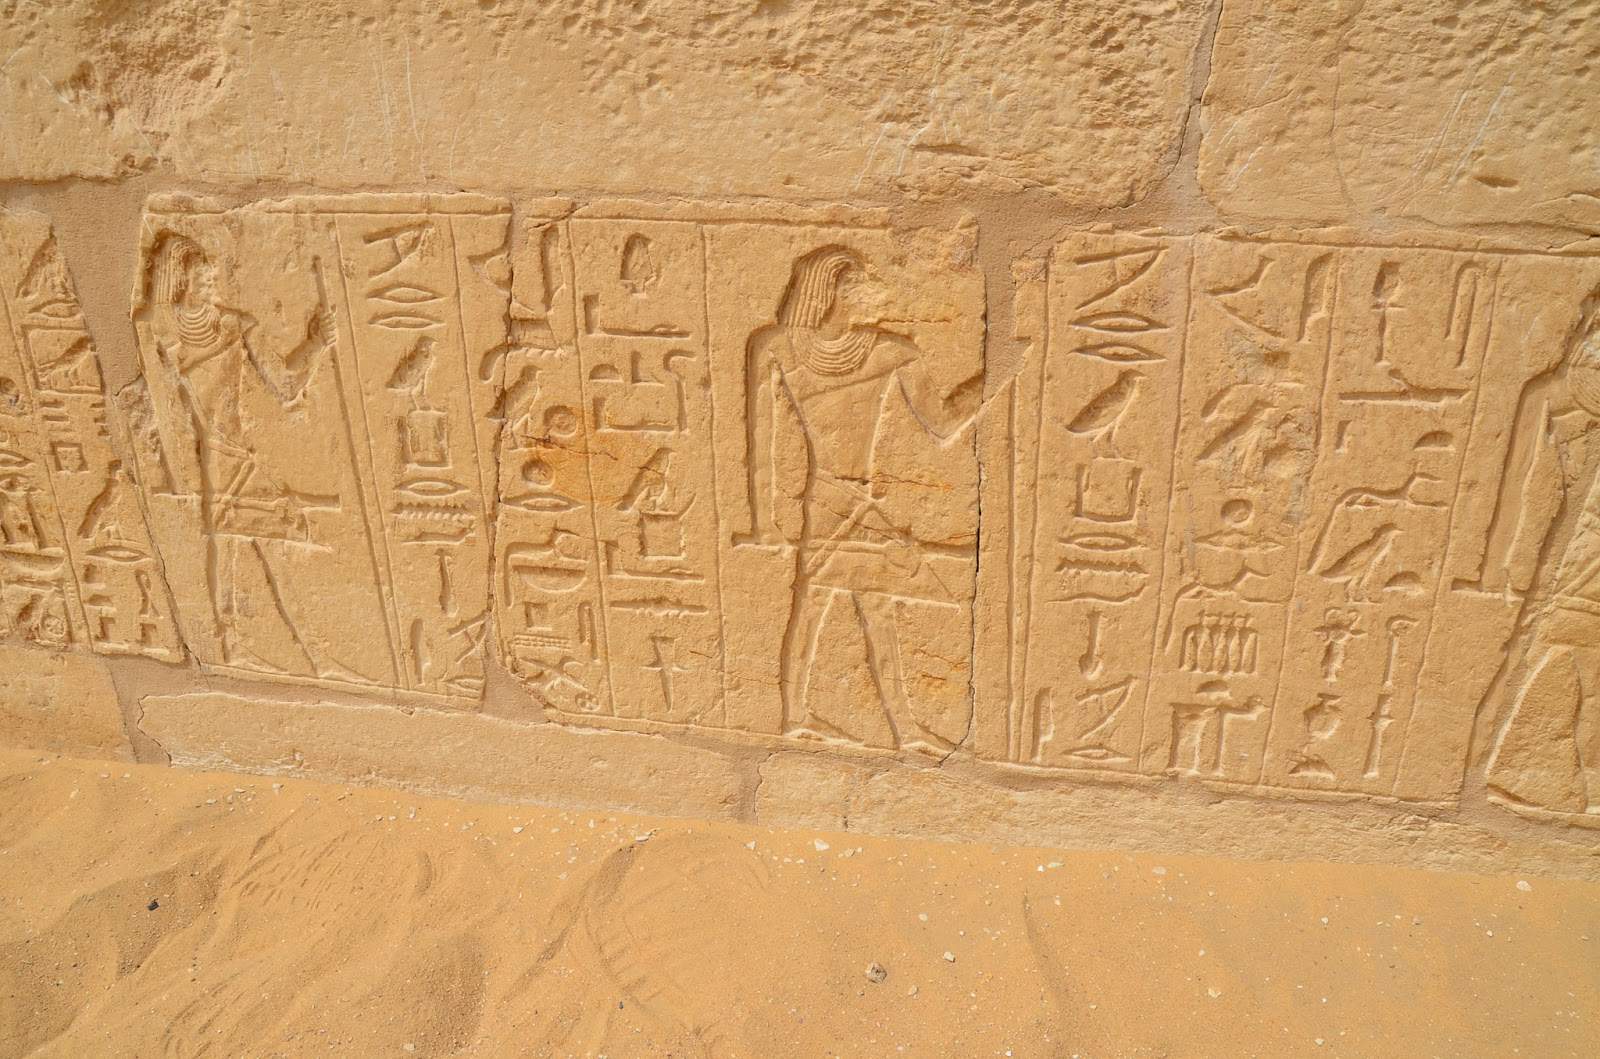 Hieroglyphics on the Tomb of Mereruka at Saqqara, Egypt